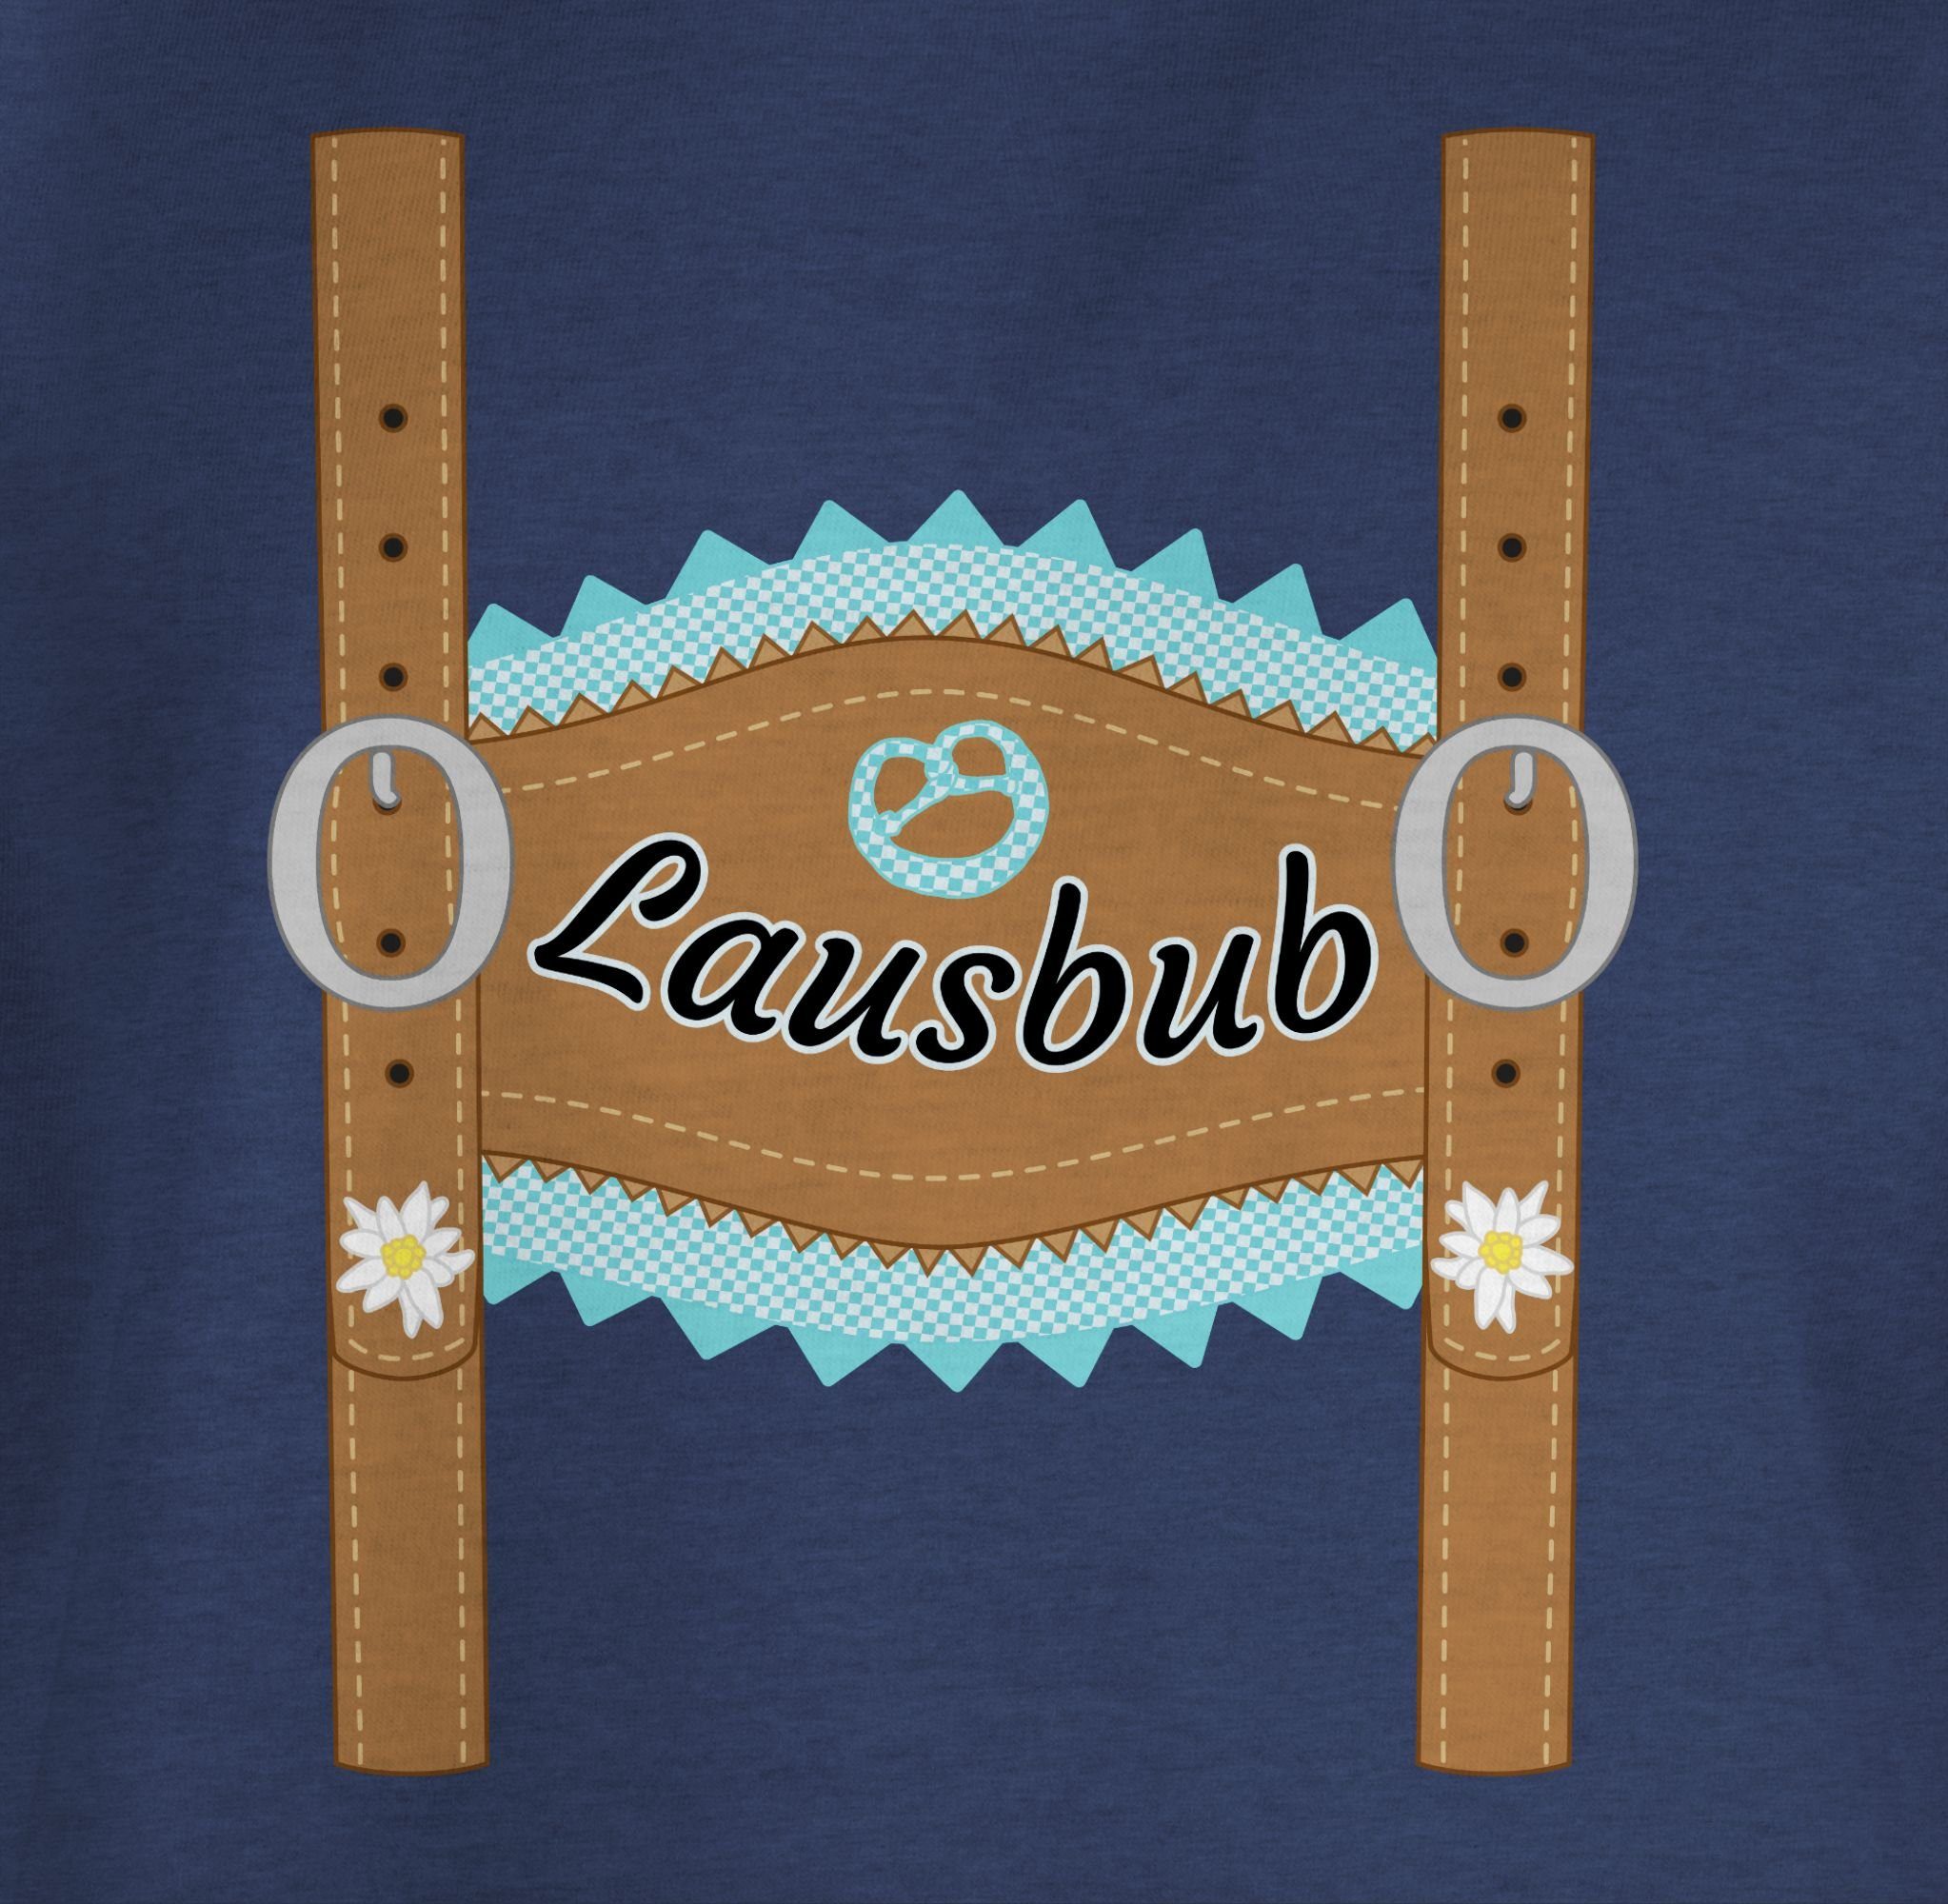 Lausbub Shirtracer Lederhose Meliert 1 Oktoberfest Kinder Mode Dunkelblau Outfit T-Shirt für